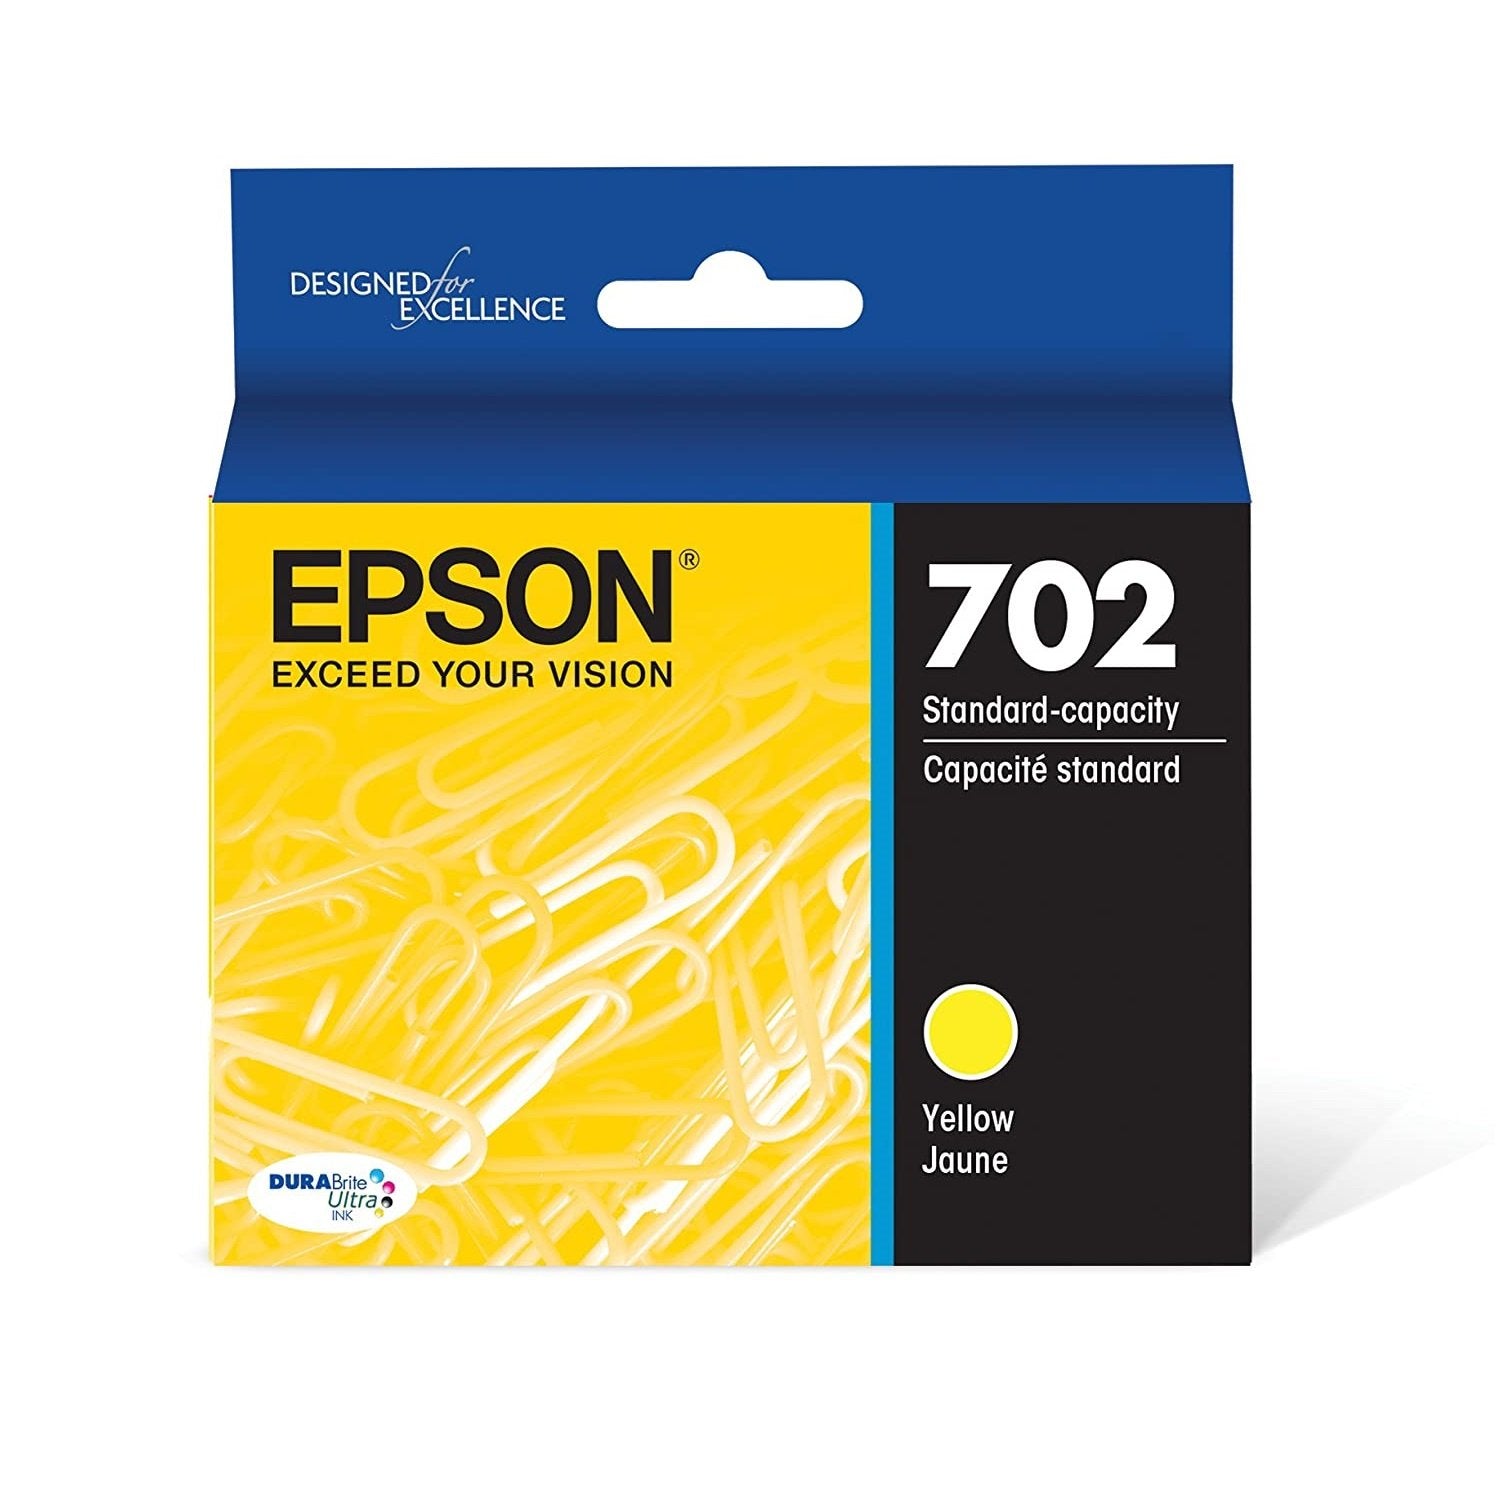 Absolute Toner Epson 702 Original Genuine OEM Yellow Ink Cartridges | T702420S Original Epson Cartridge